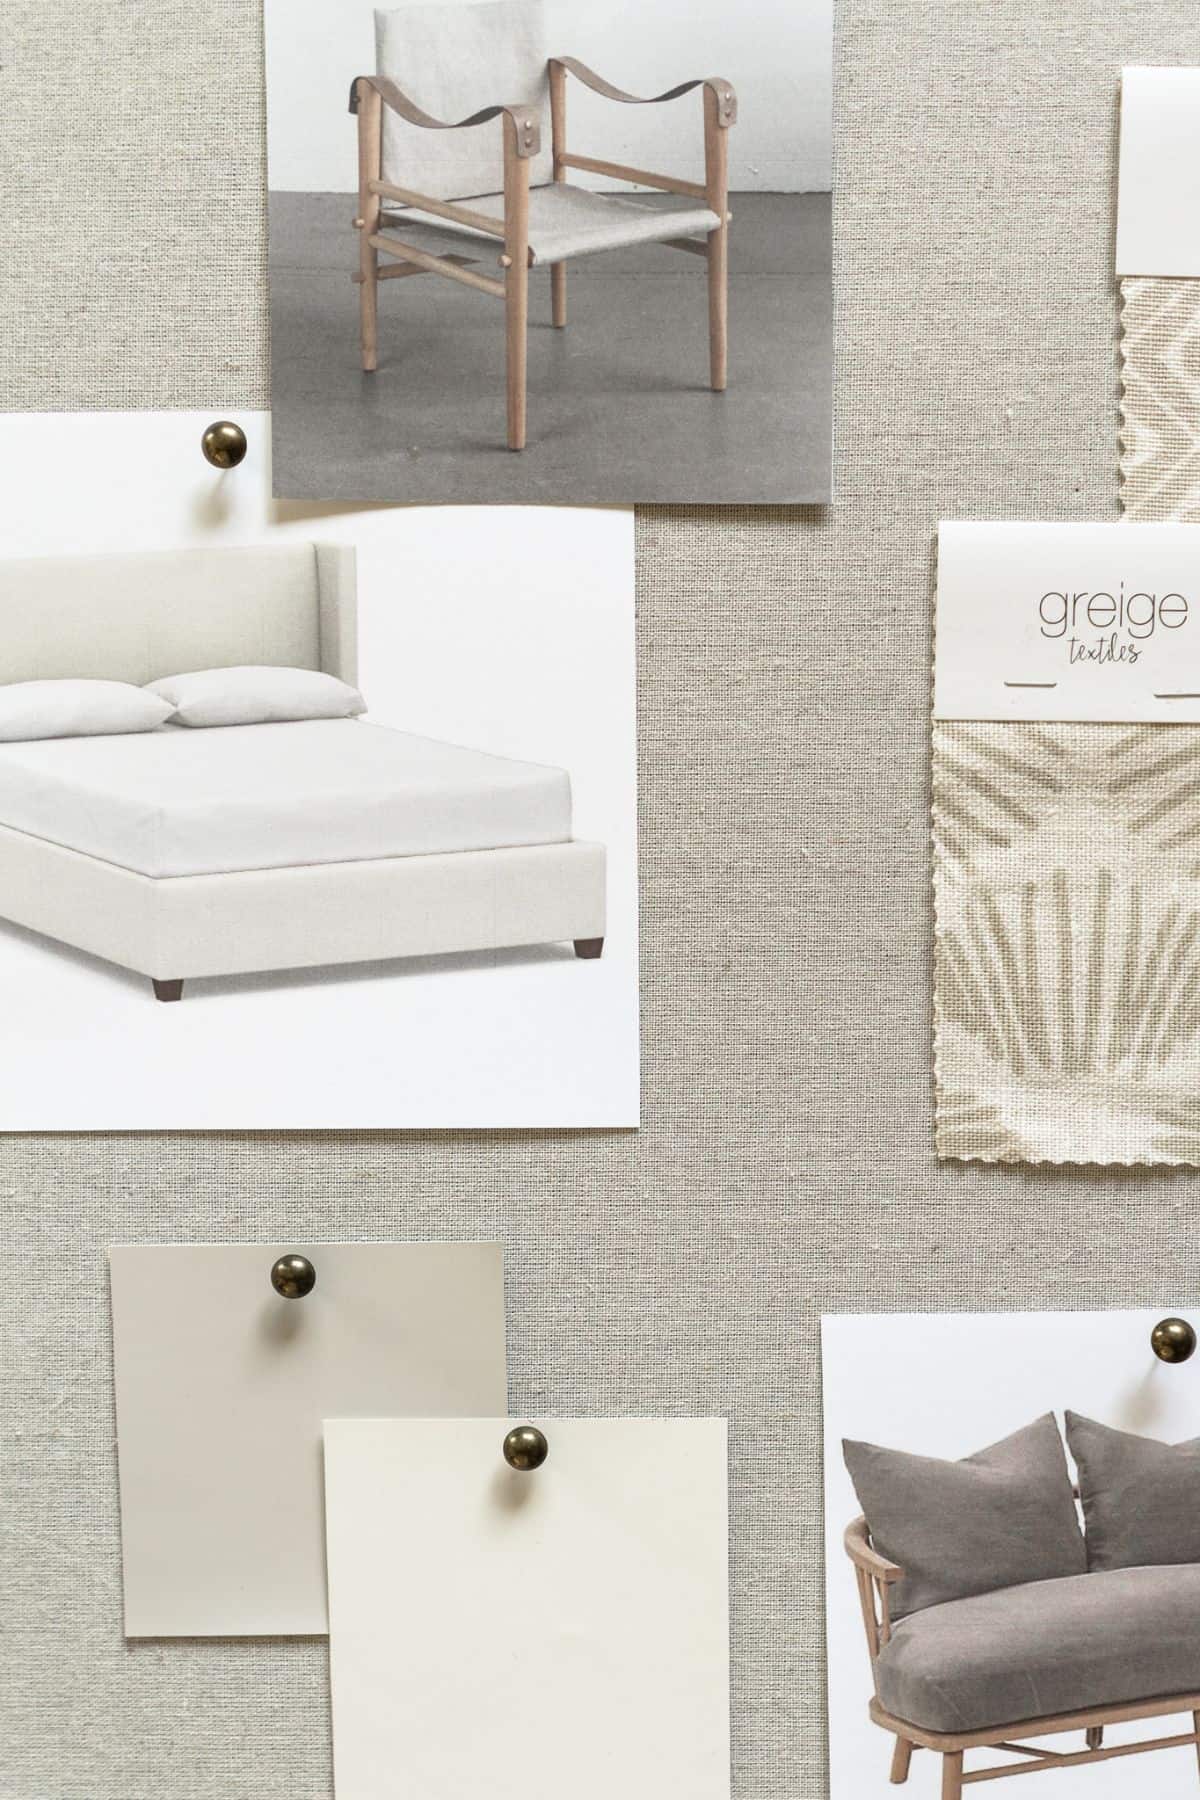 Gray Bedroom Mood Board - Mindy Gayer Design Co.